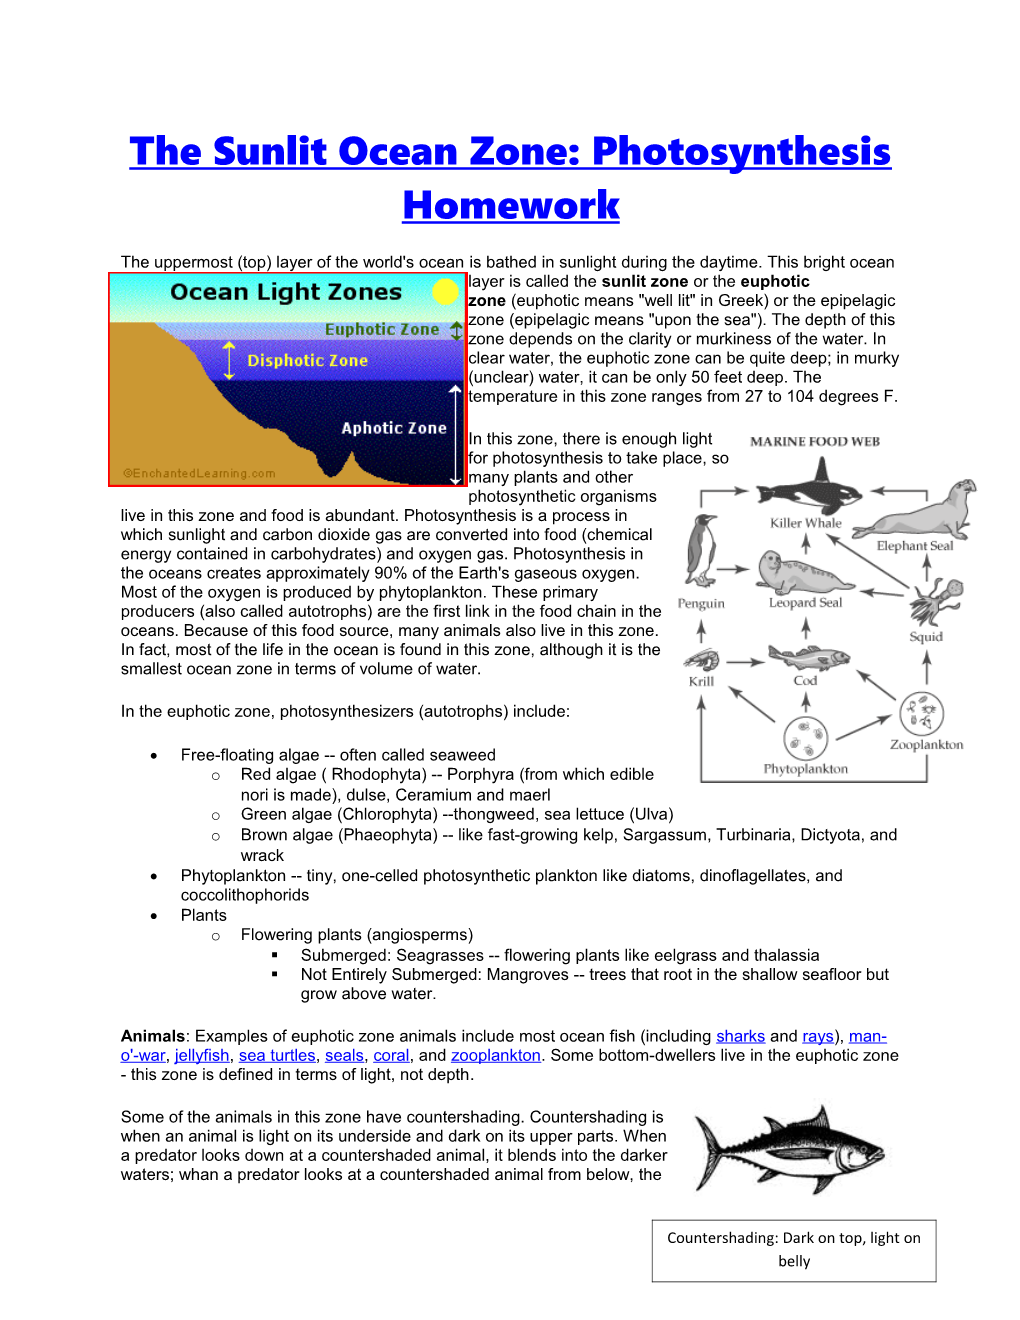 The Sunlit Ocean Zone: Photosynthesis Homework